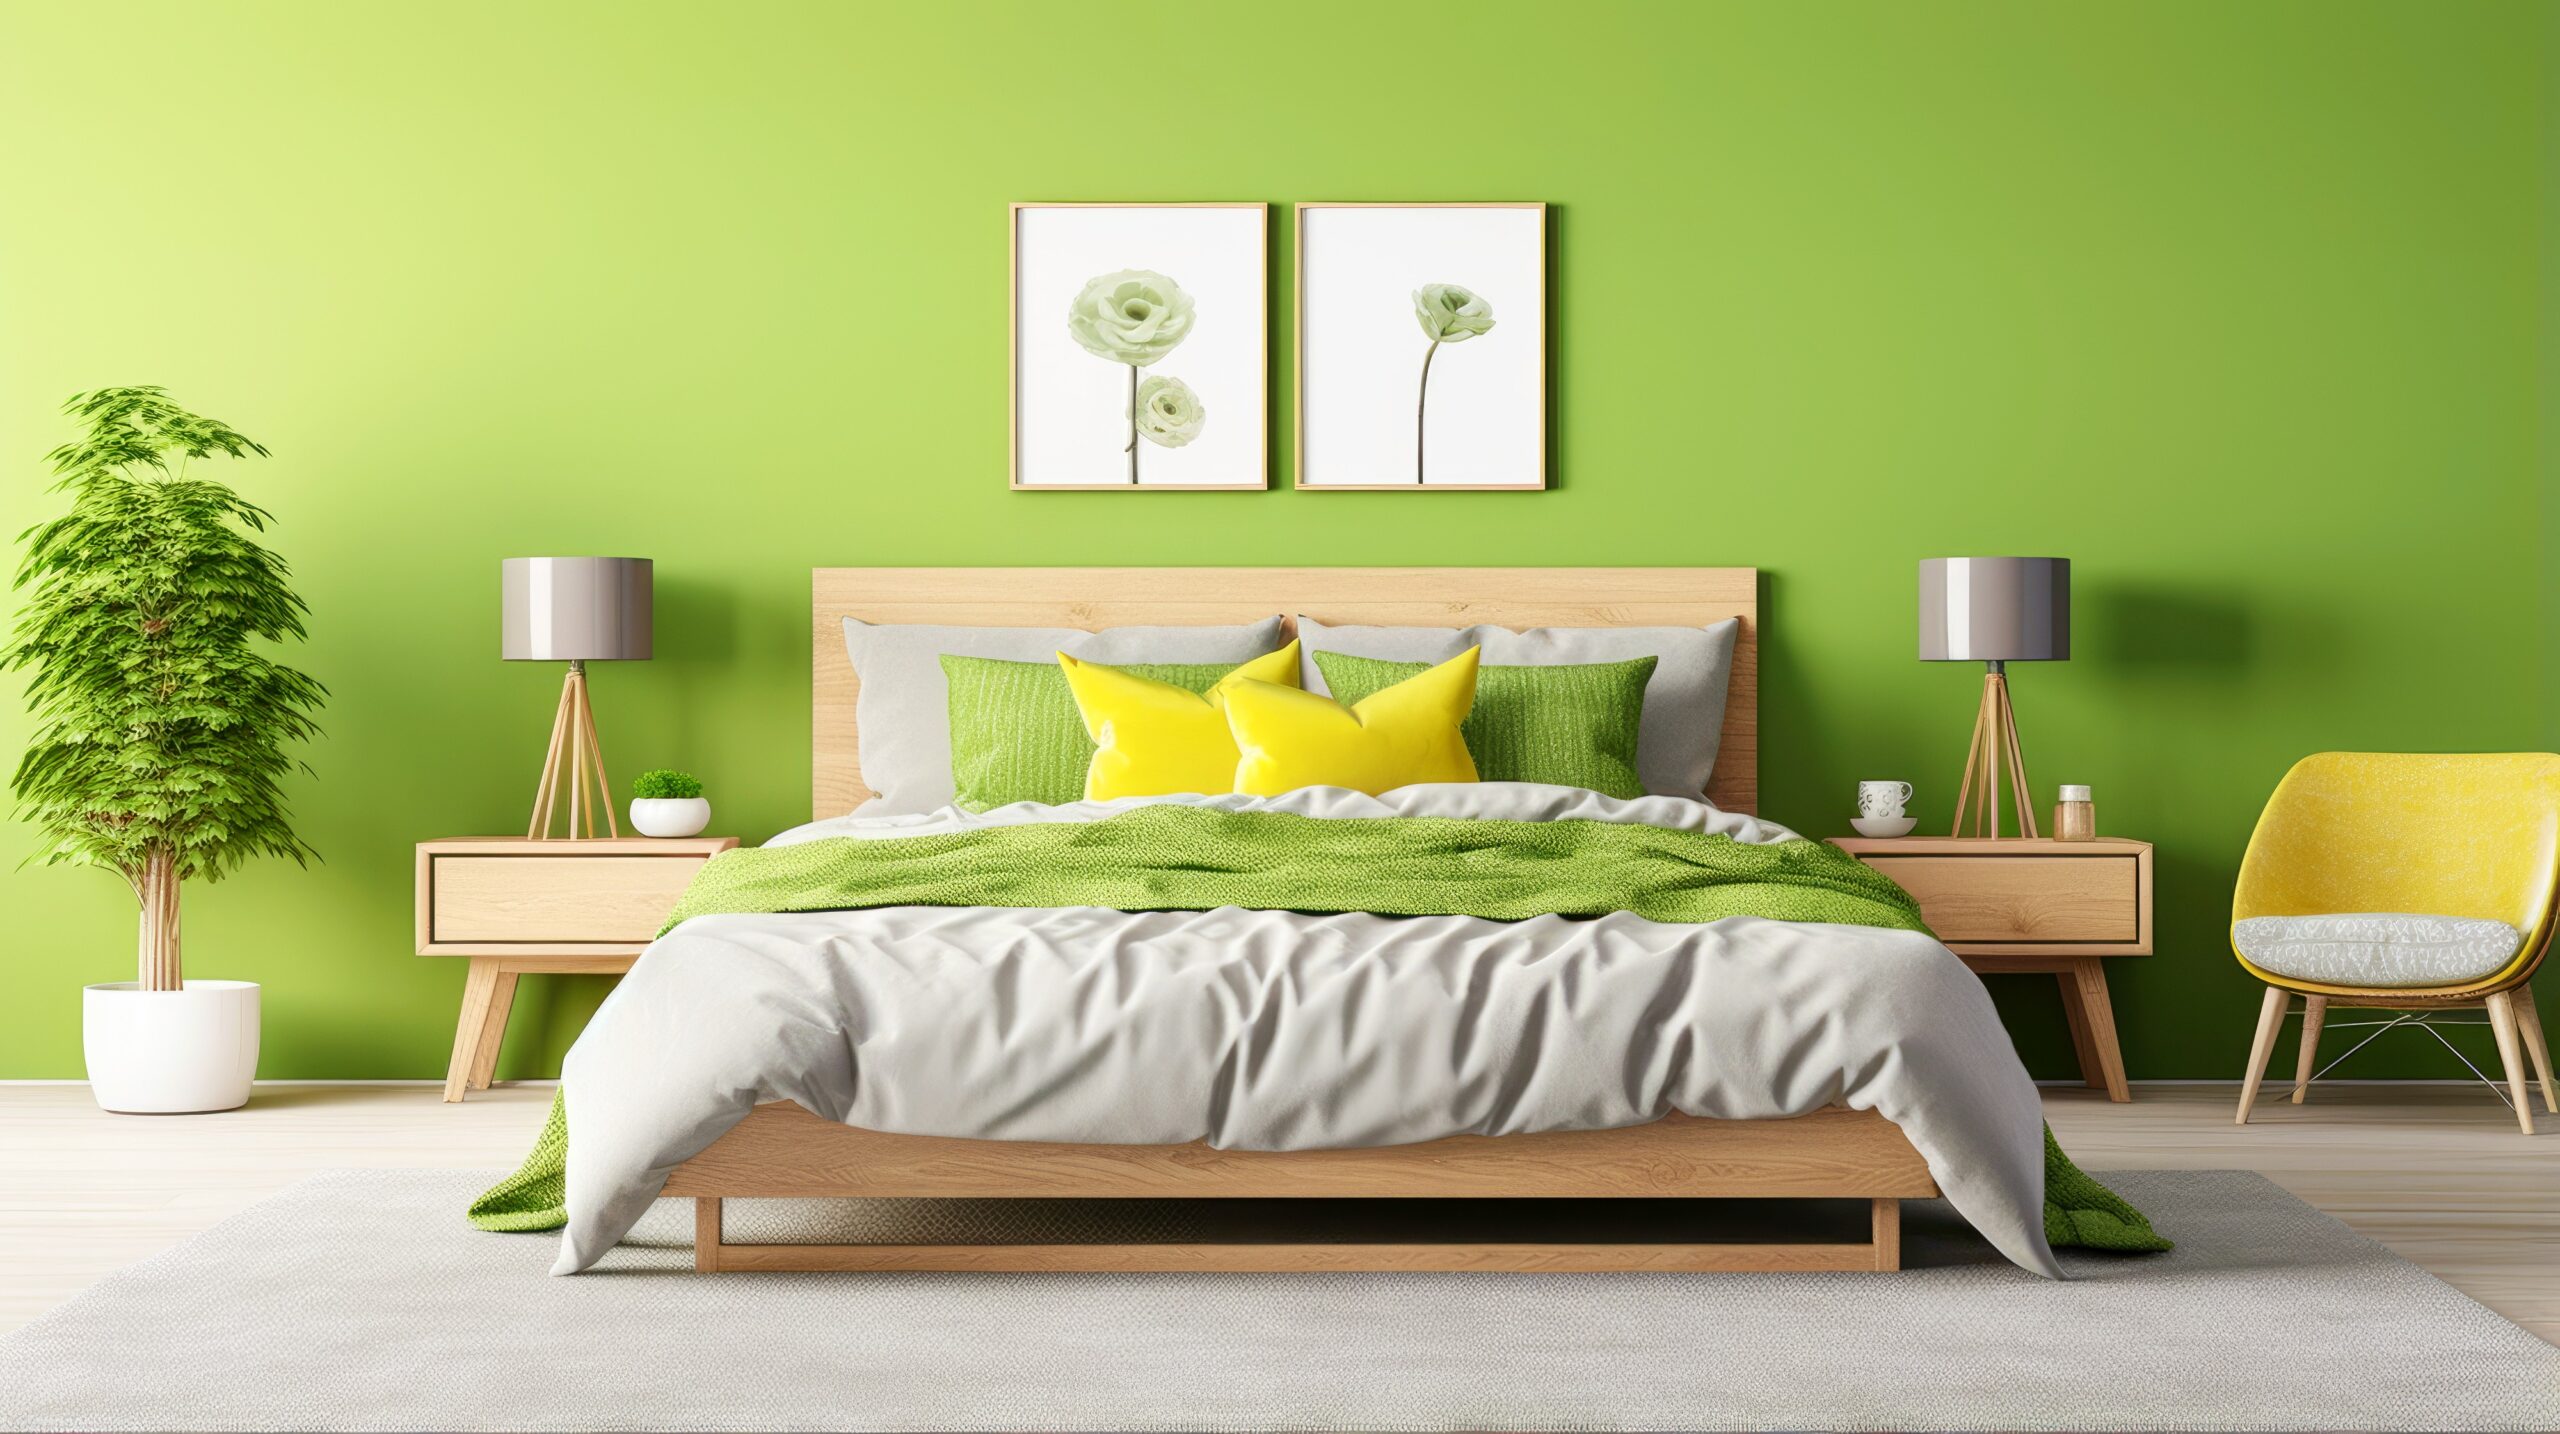 <img src="green.jpg" alt="green bedroom with plants"/>